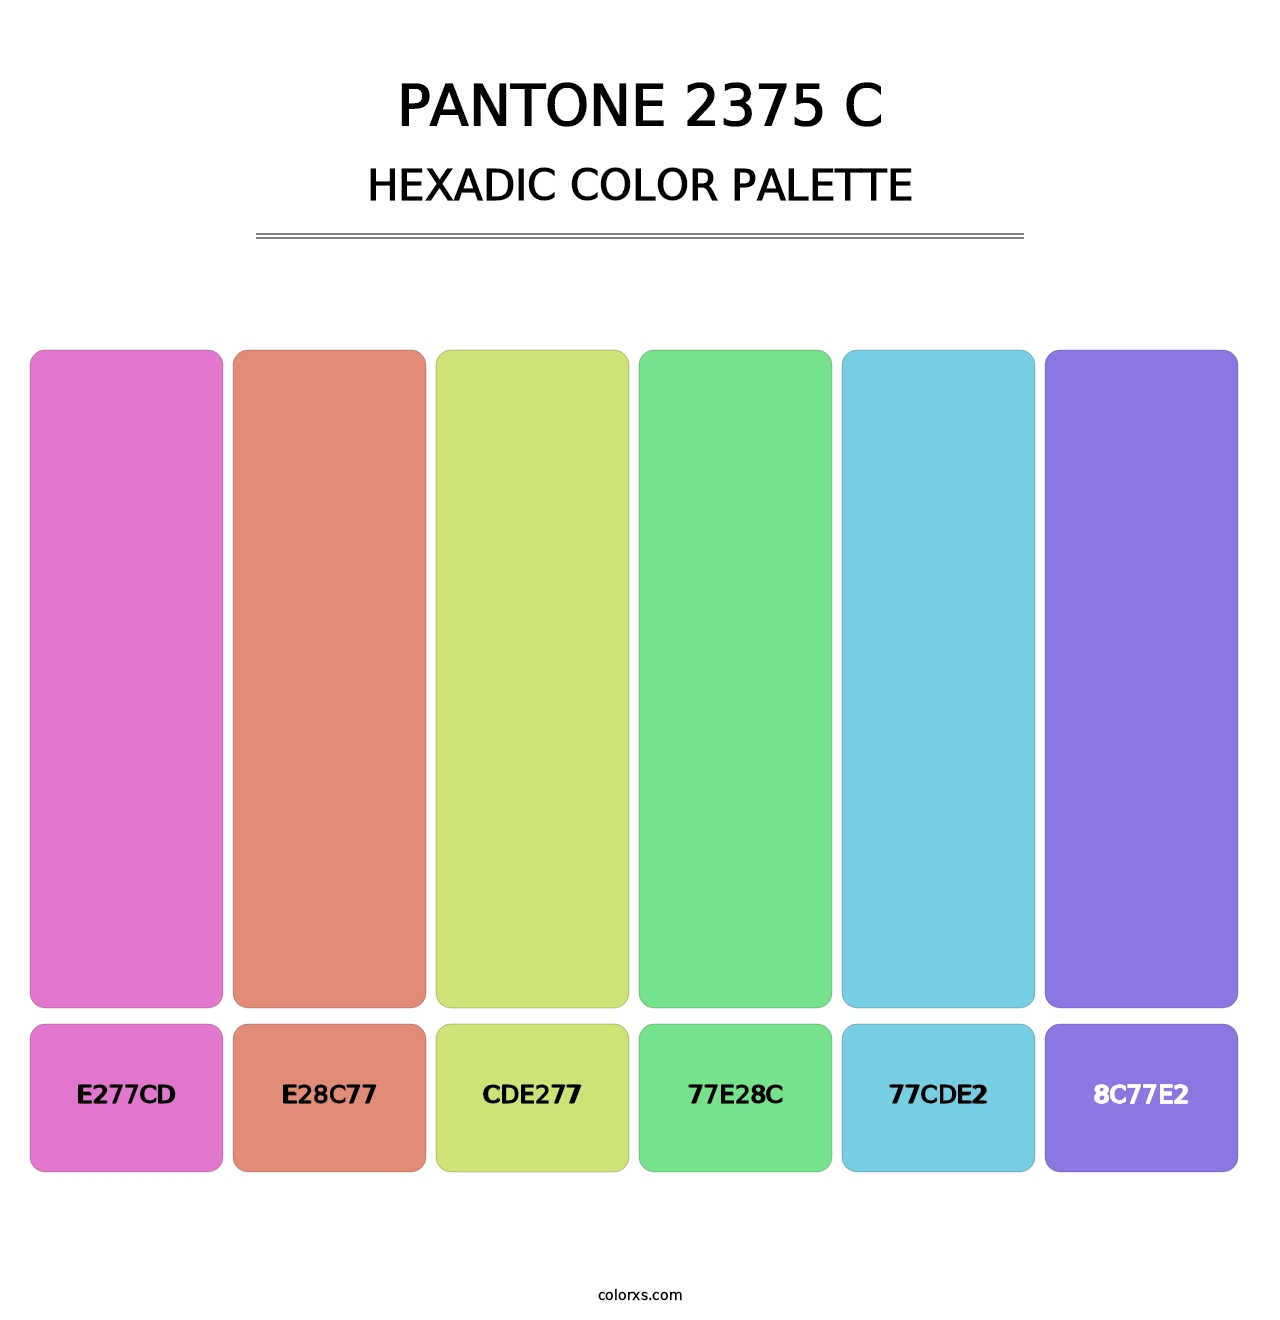 PANTONE 2375 C - Hexadic Color Palette